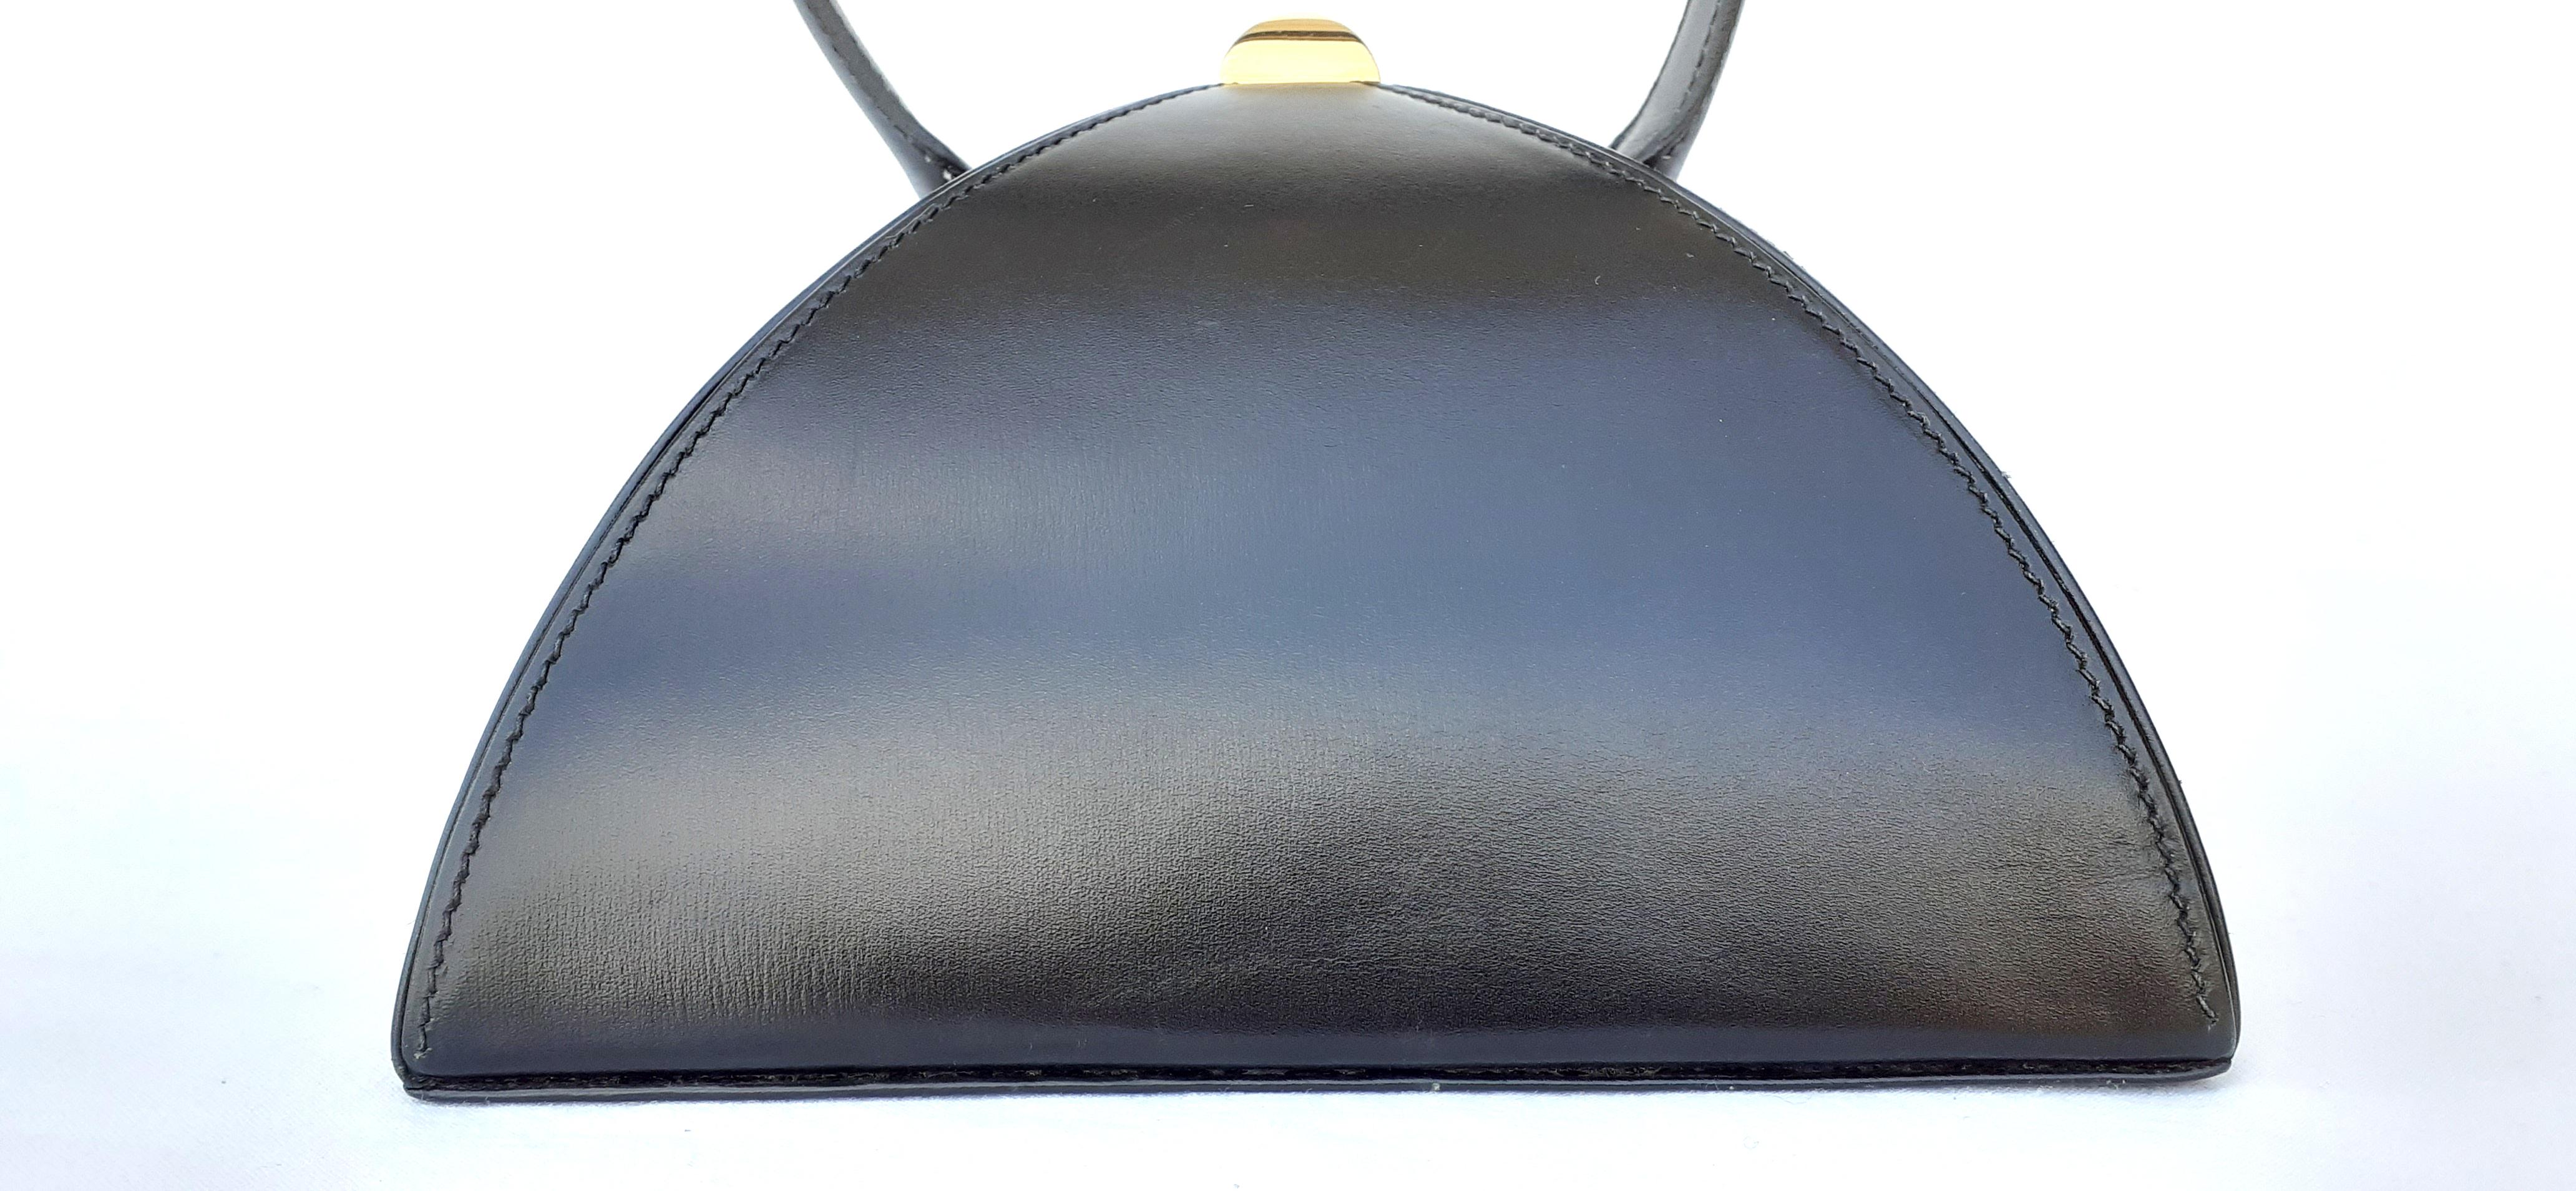 Exceptional Hermès Vintage Tee Time Bag Minaudiere Black Box Leather Ghw RARE 1